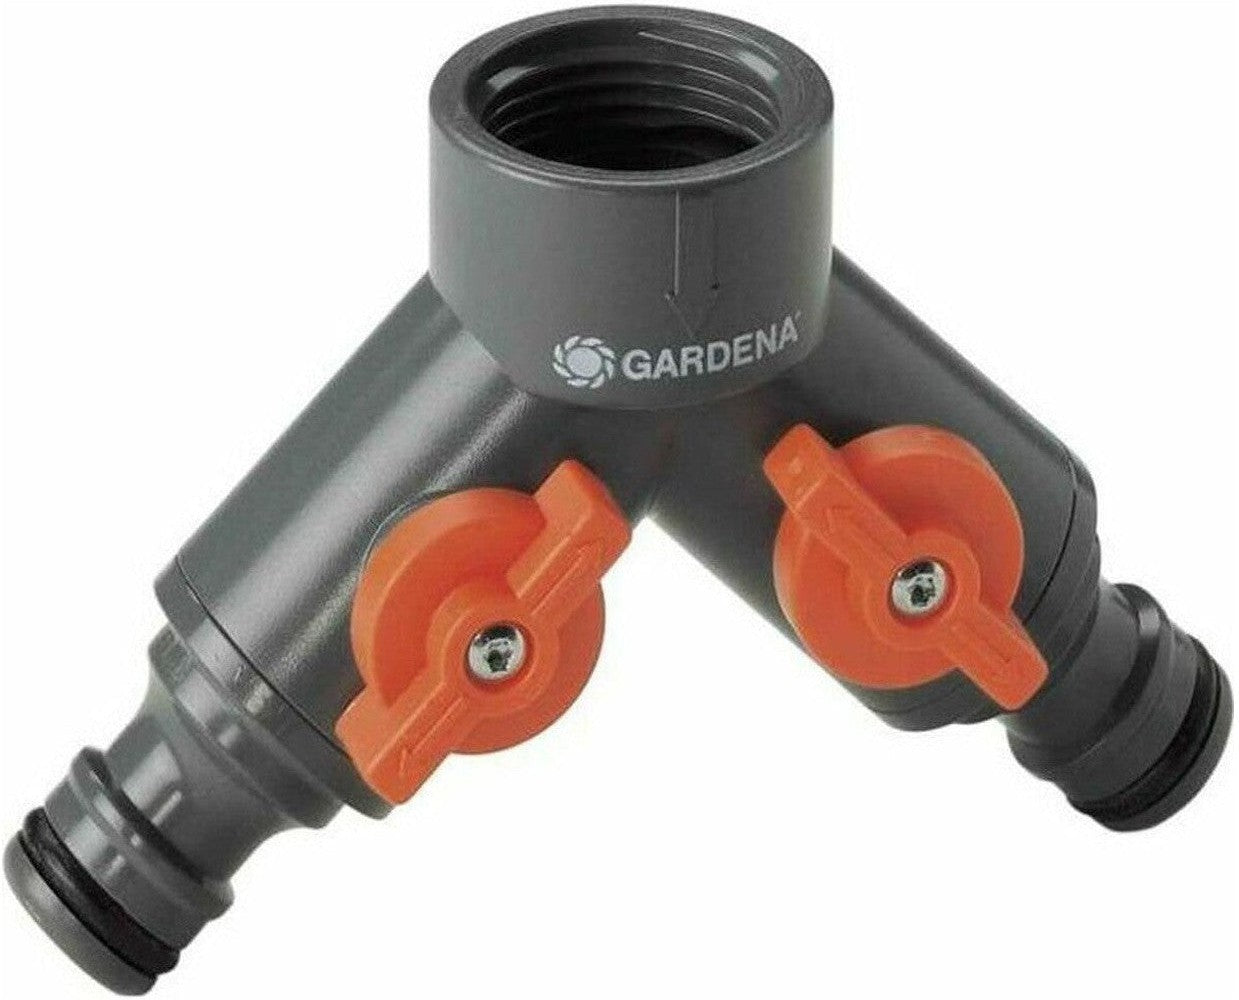 Connector Gardena 940-26 dobbelt